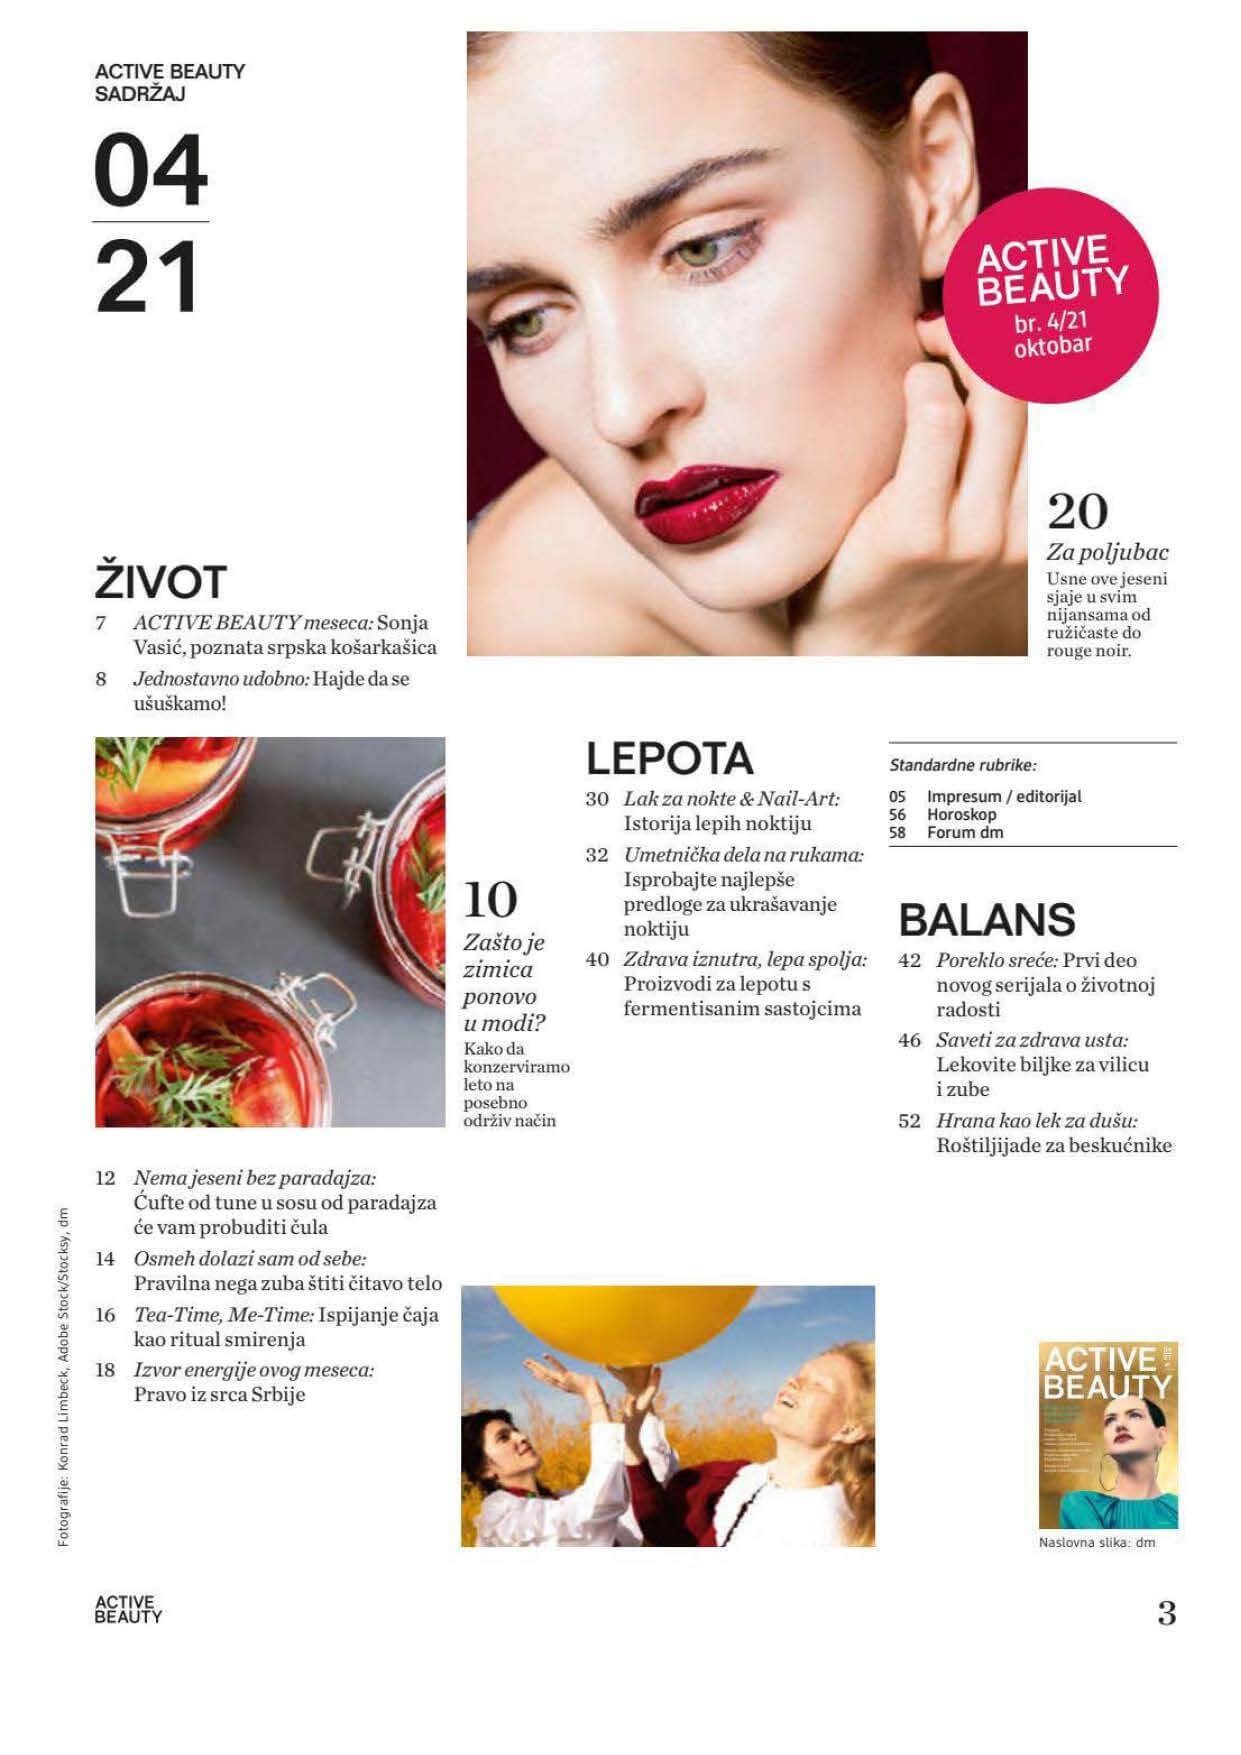 DM Katalog Active Beauty 4 21 ekatalozi.com Page 03